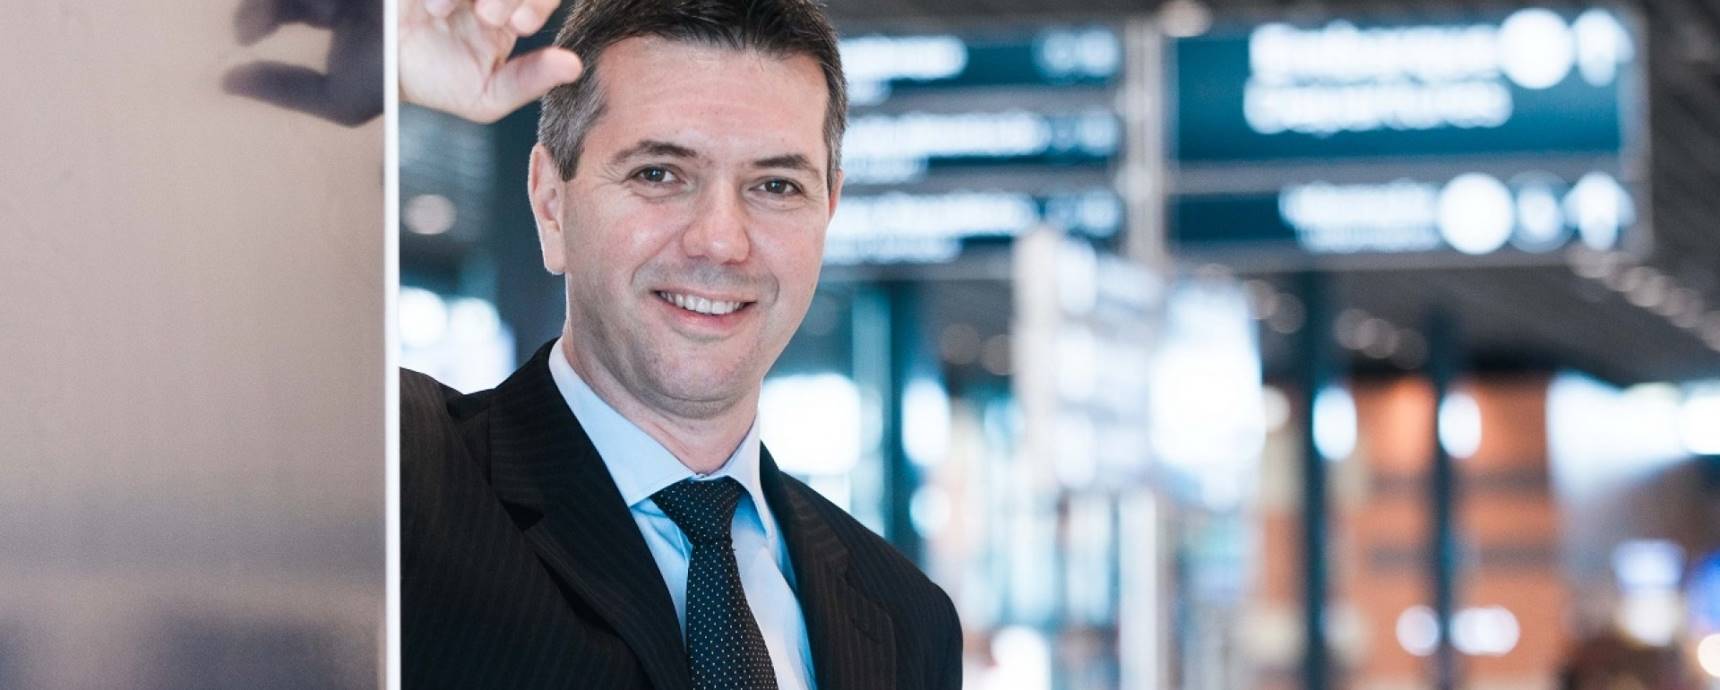 Ricardo Gesse is the new CEO of Florianópolis, Vitória and Macaé airports